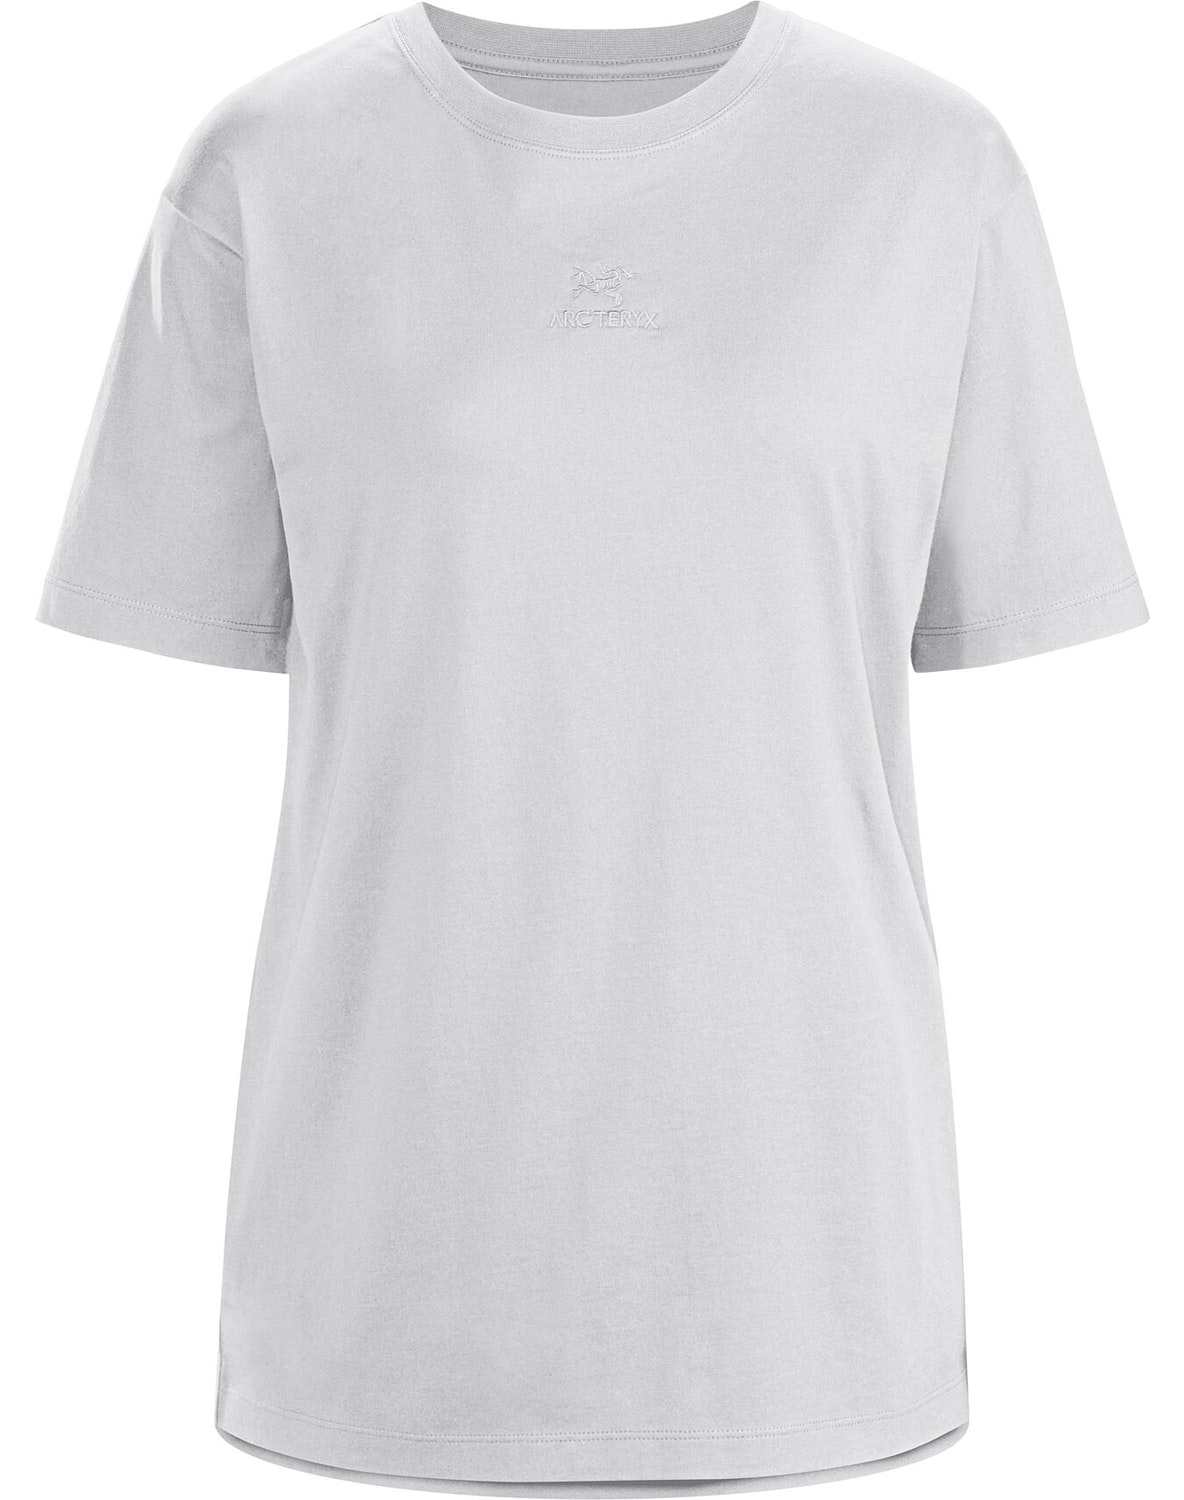 T-shirt Arc'teryx Pendant Donna Bianche - IT-417533